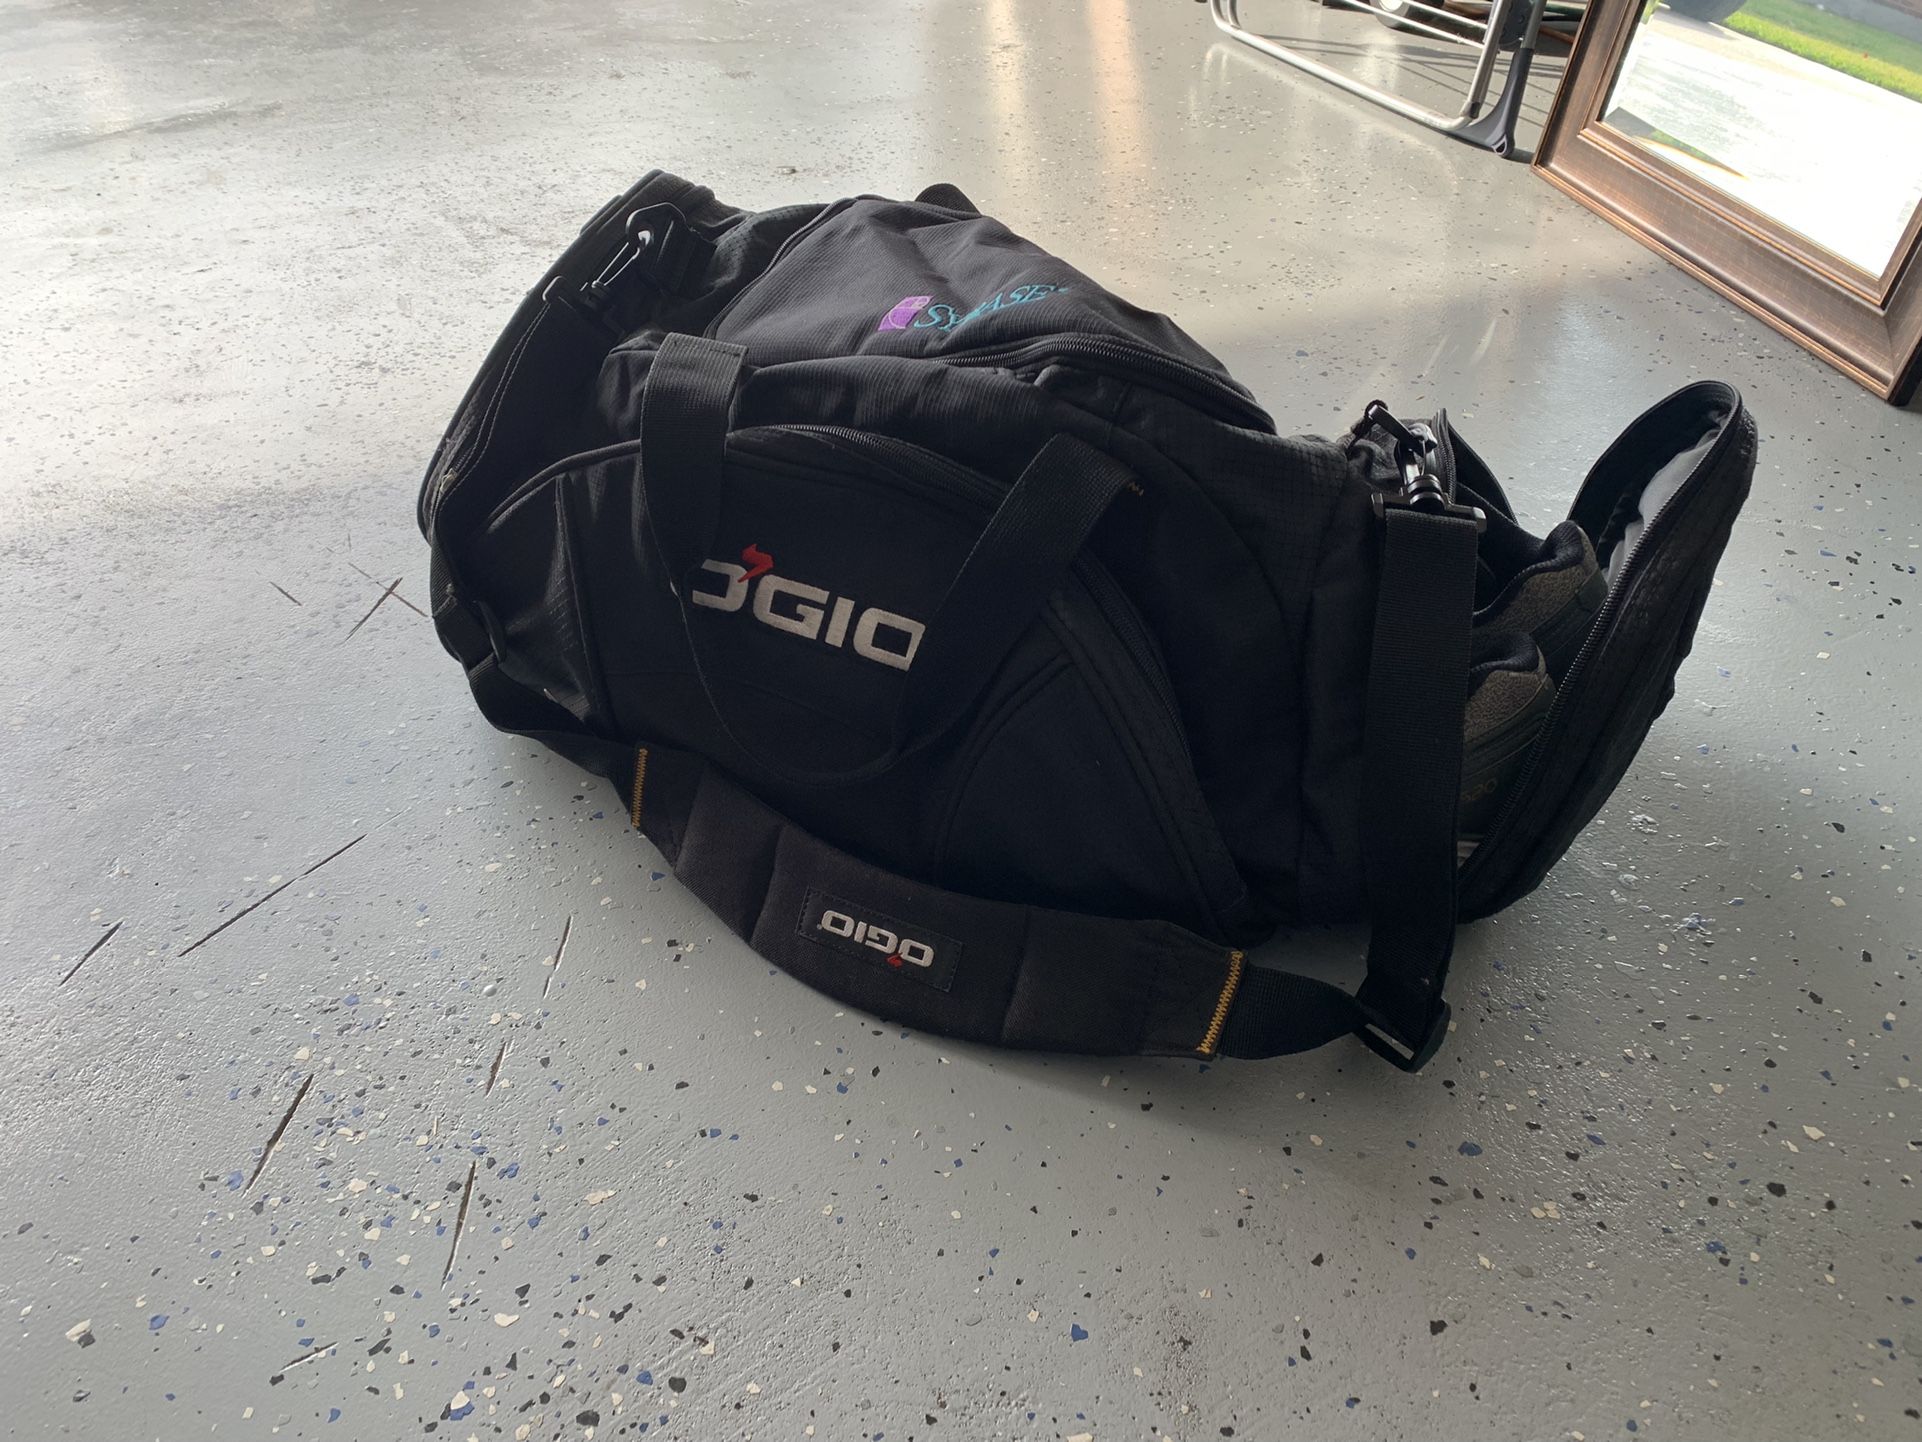 OGIO Duffle Bag - 50 Liter - $20